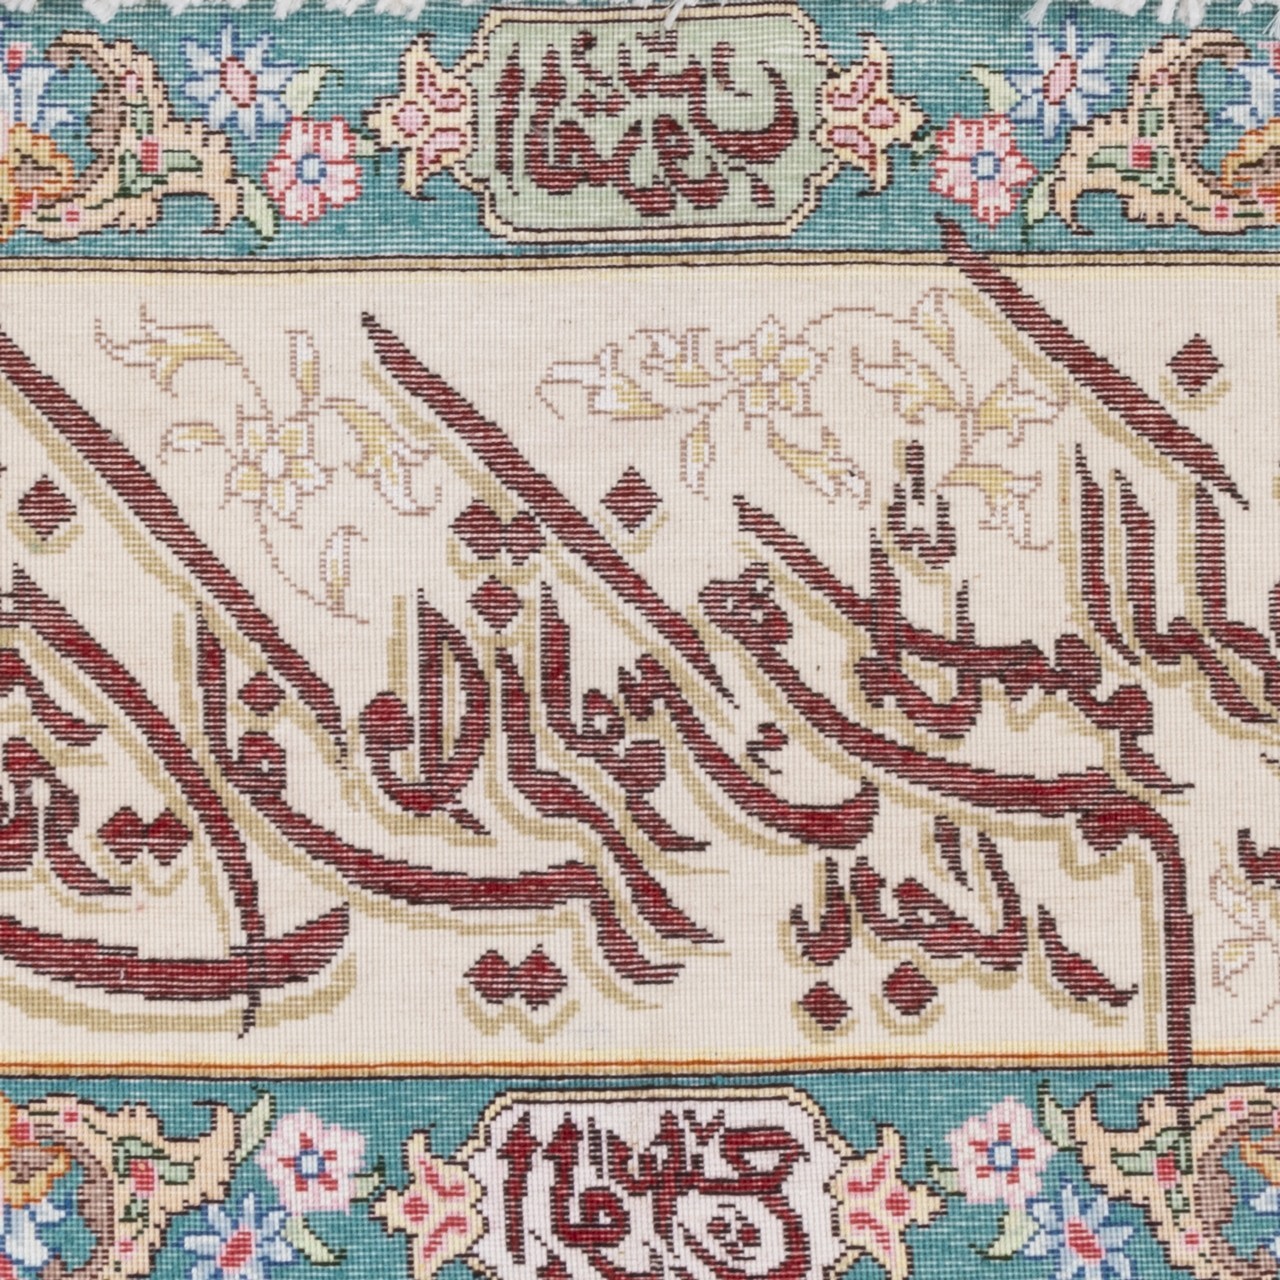 Pictorial Tabriz Carpet Ref: 901711